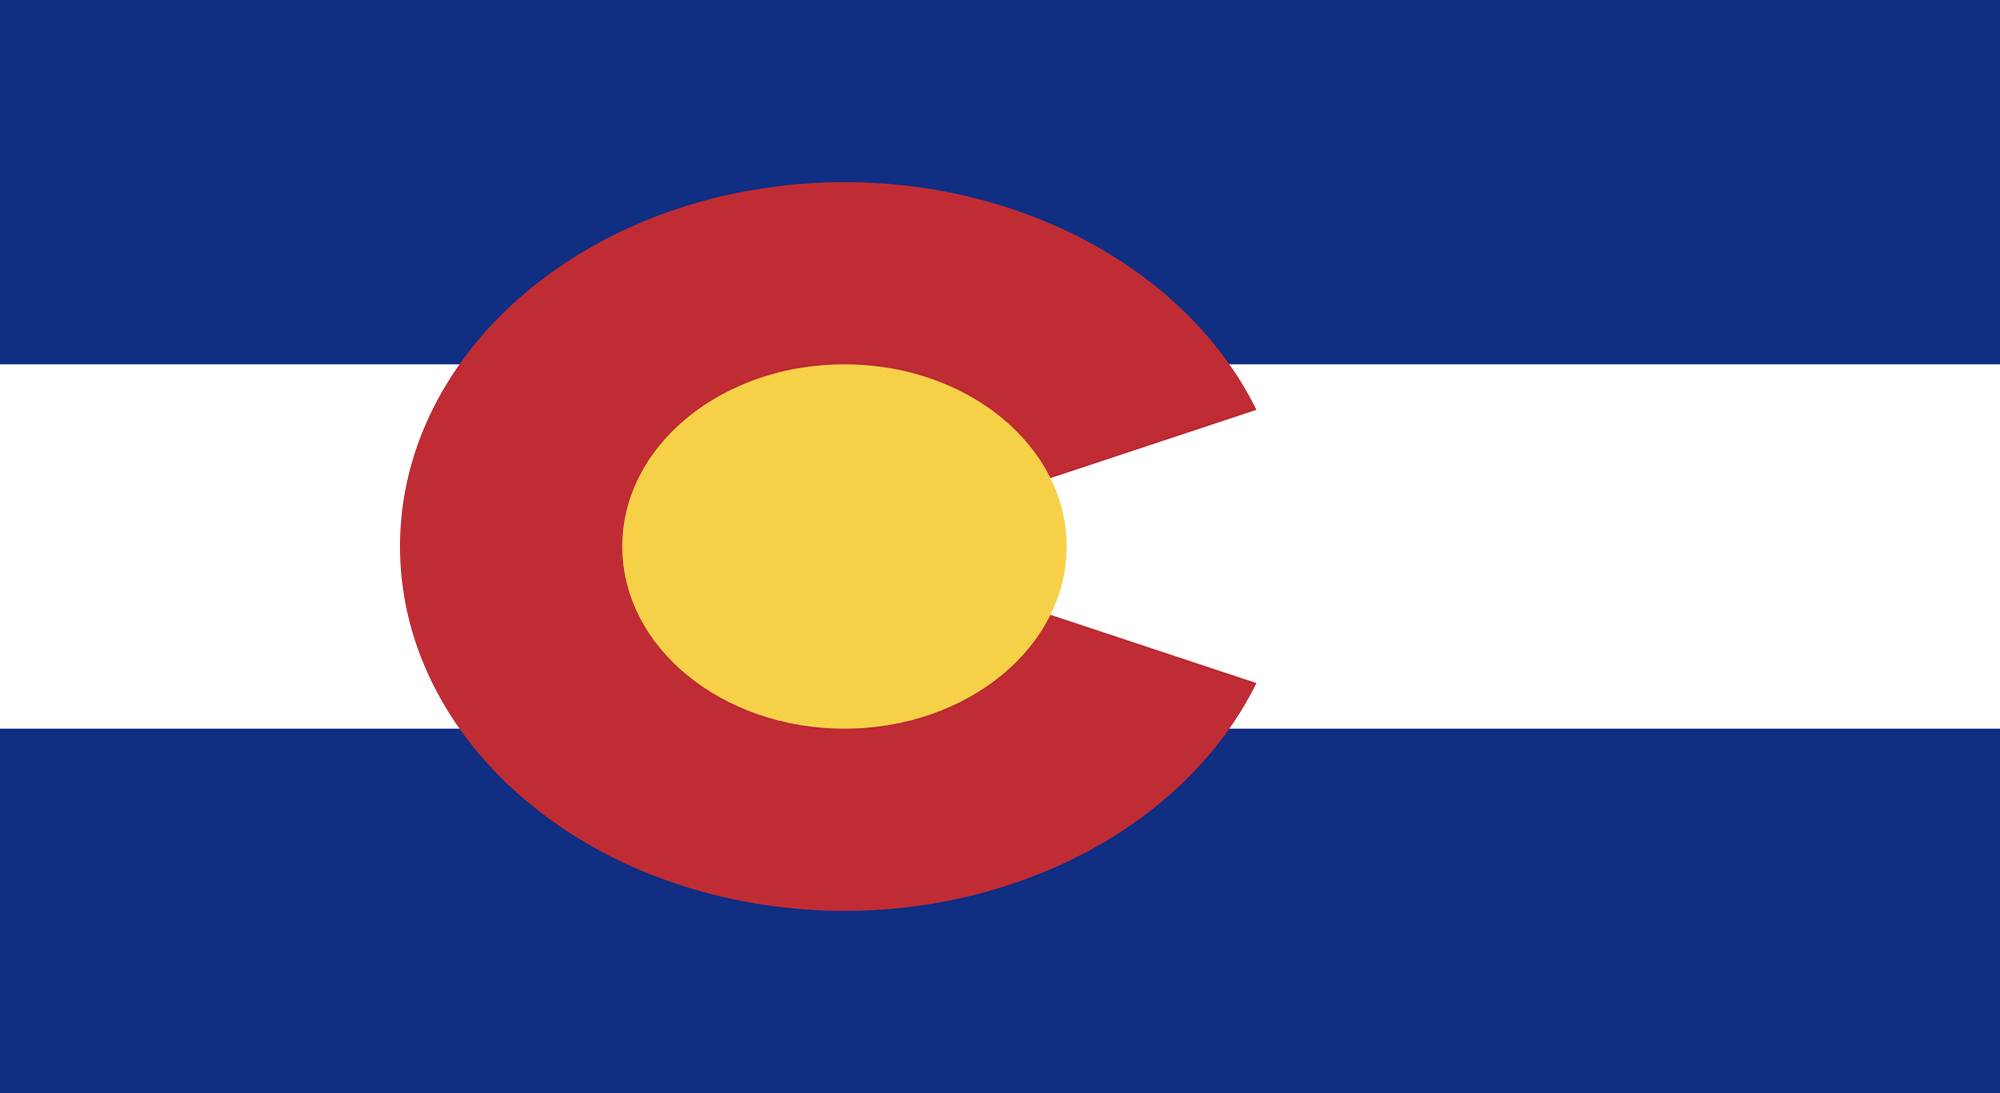 Image of the Colorado flag